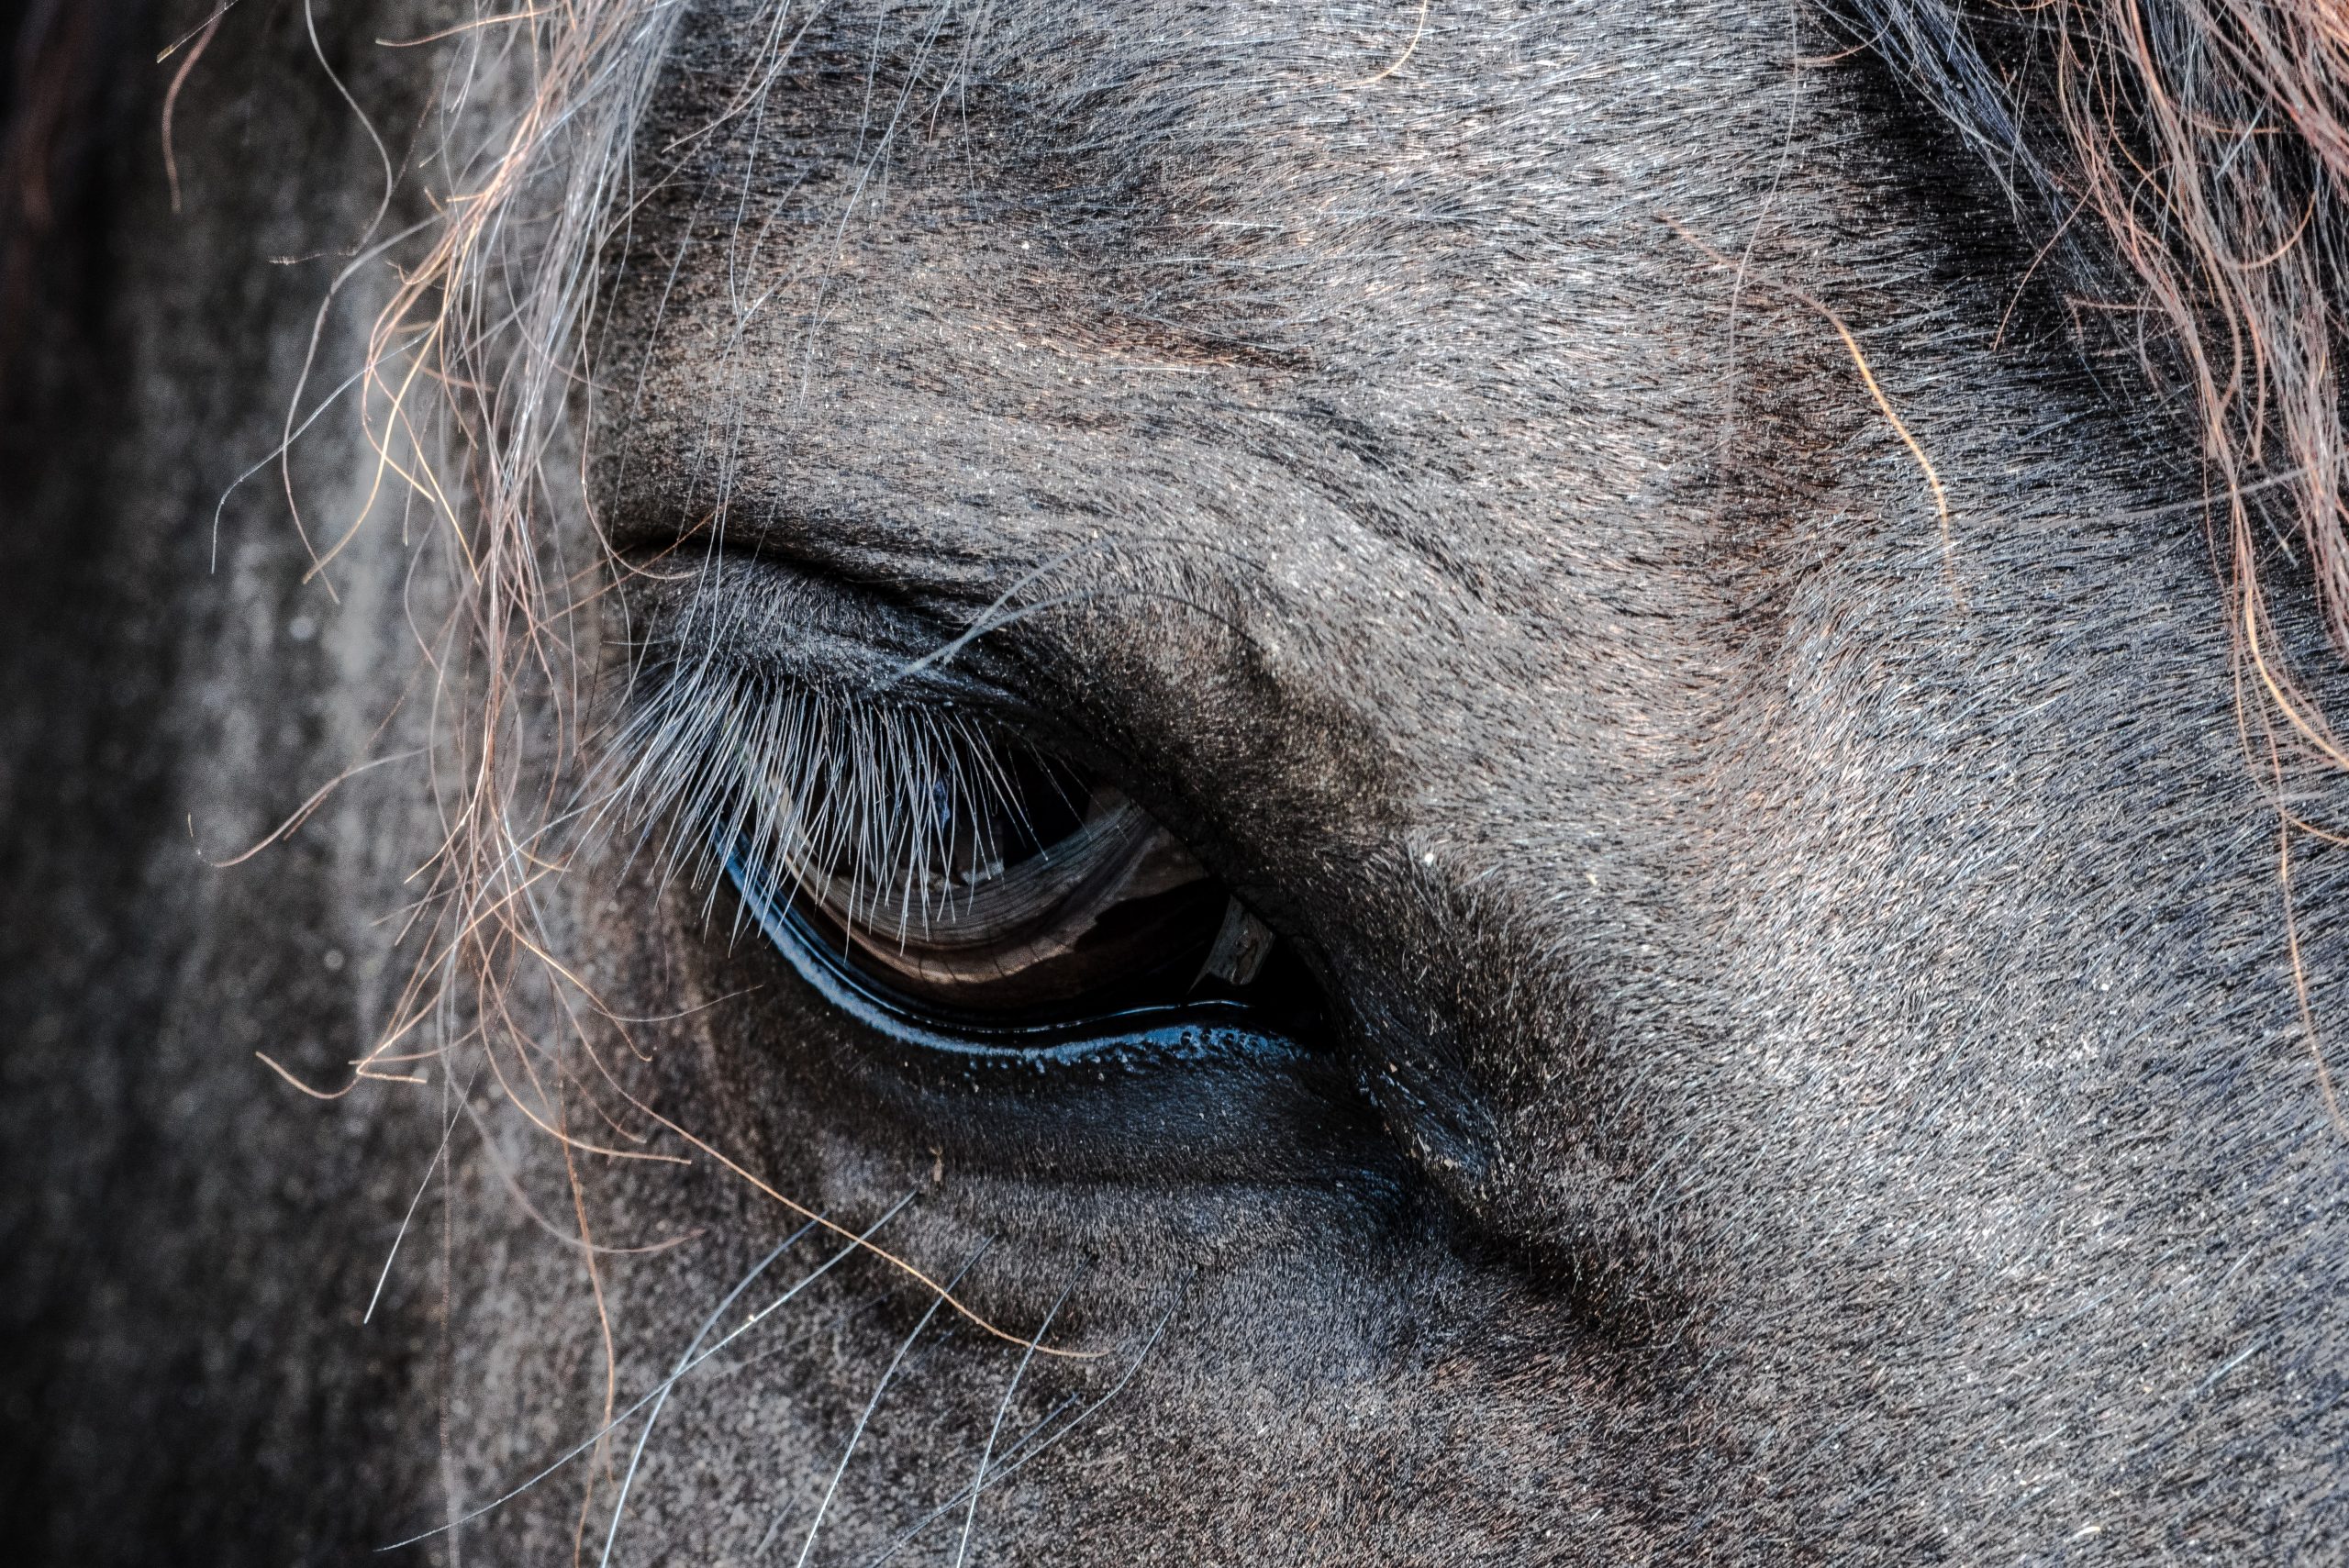 Gray horse’s eye